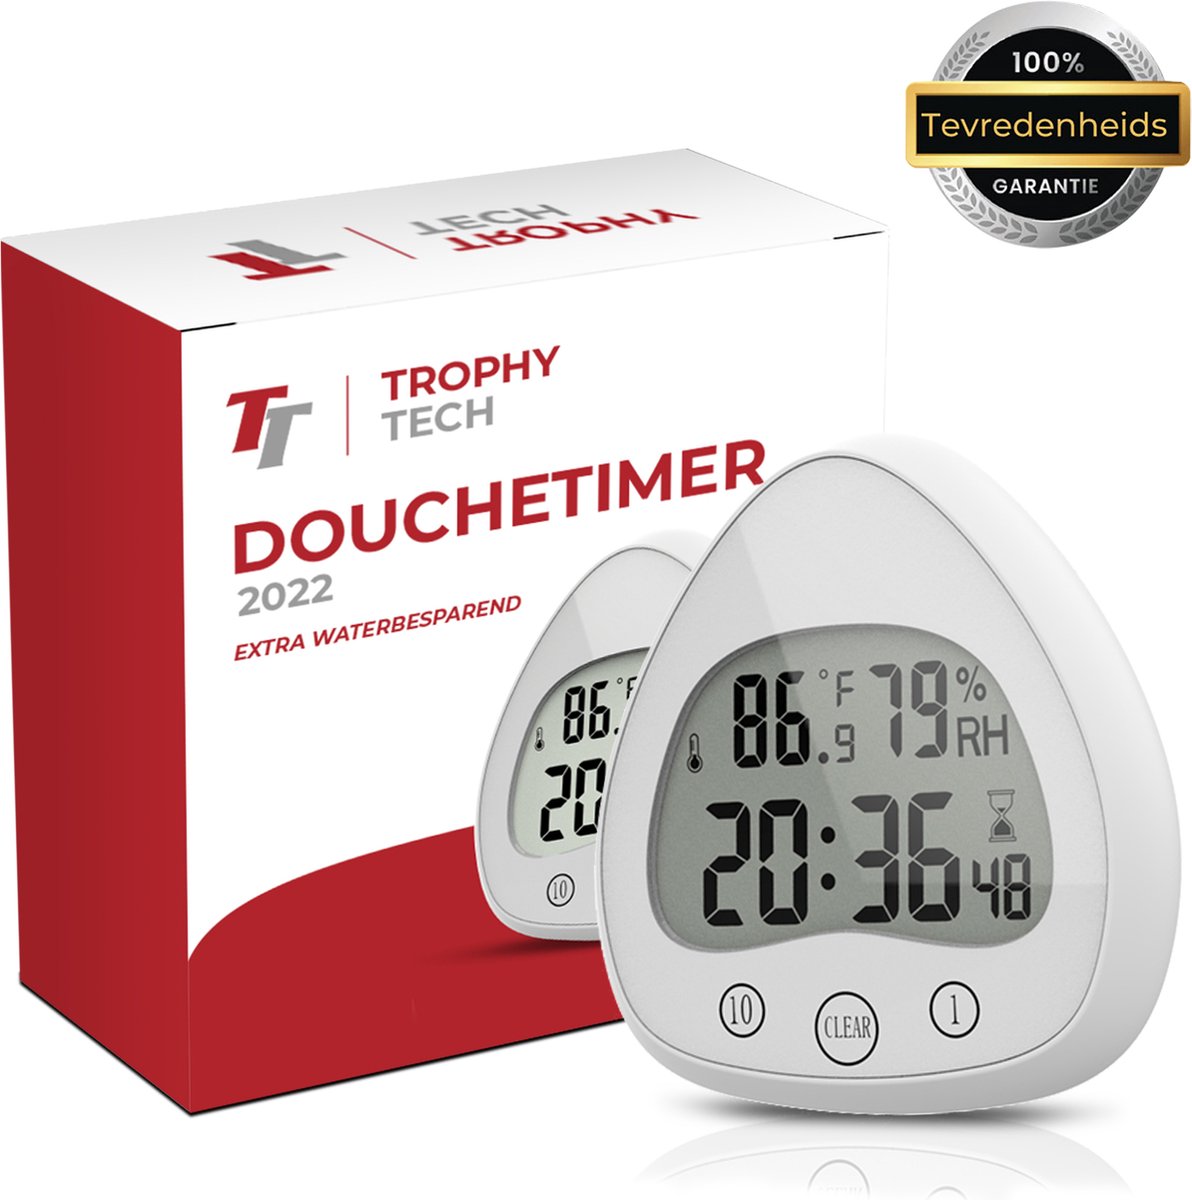 Trophy tech® Douchetimer Hygrometer - Douchewekker Waterbesparend - Douche Klok - BadkamerKlok Waterdicht - Luchtvochtigheidsmeter & Douche klok